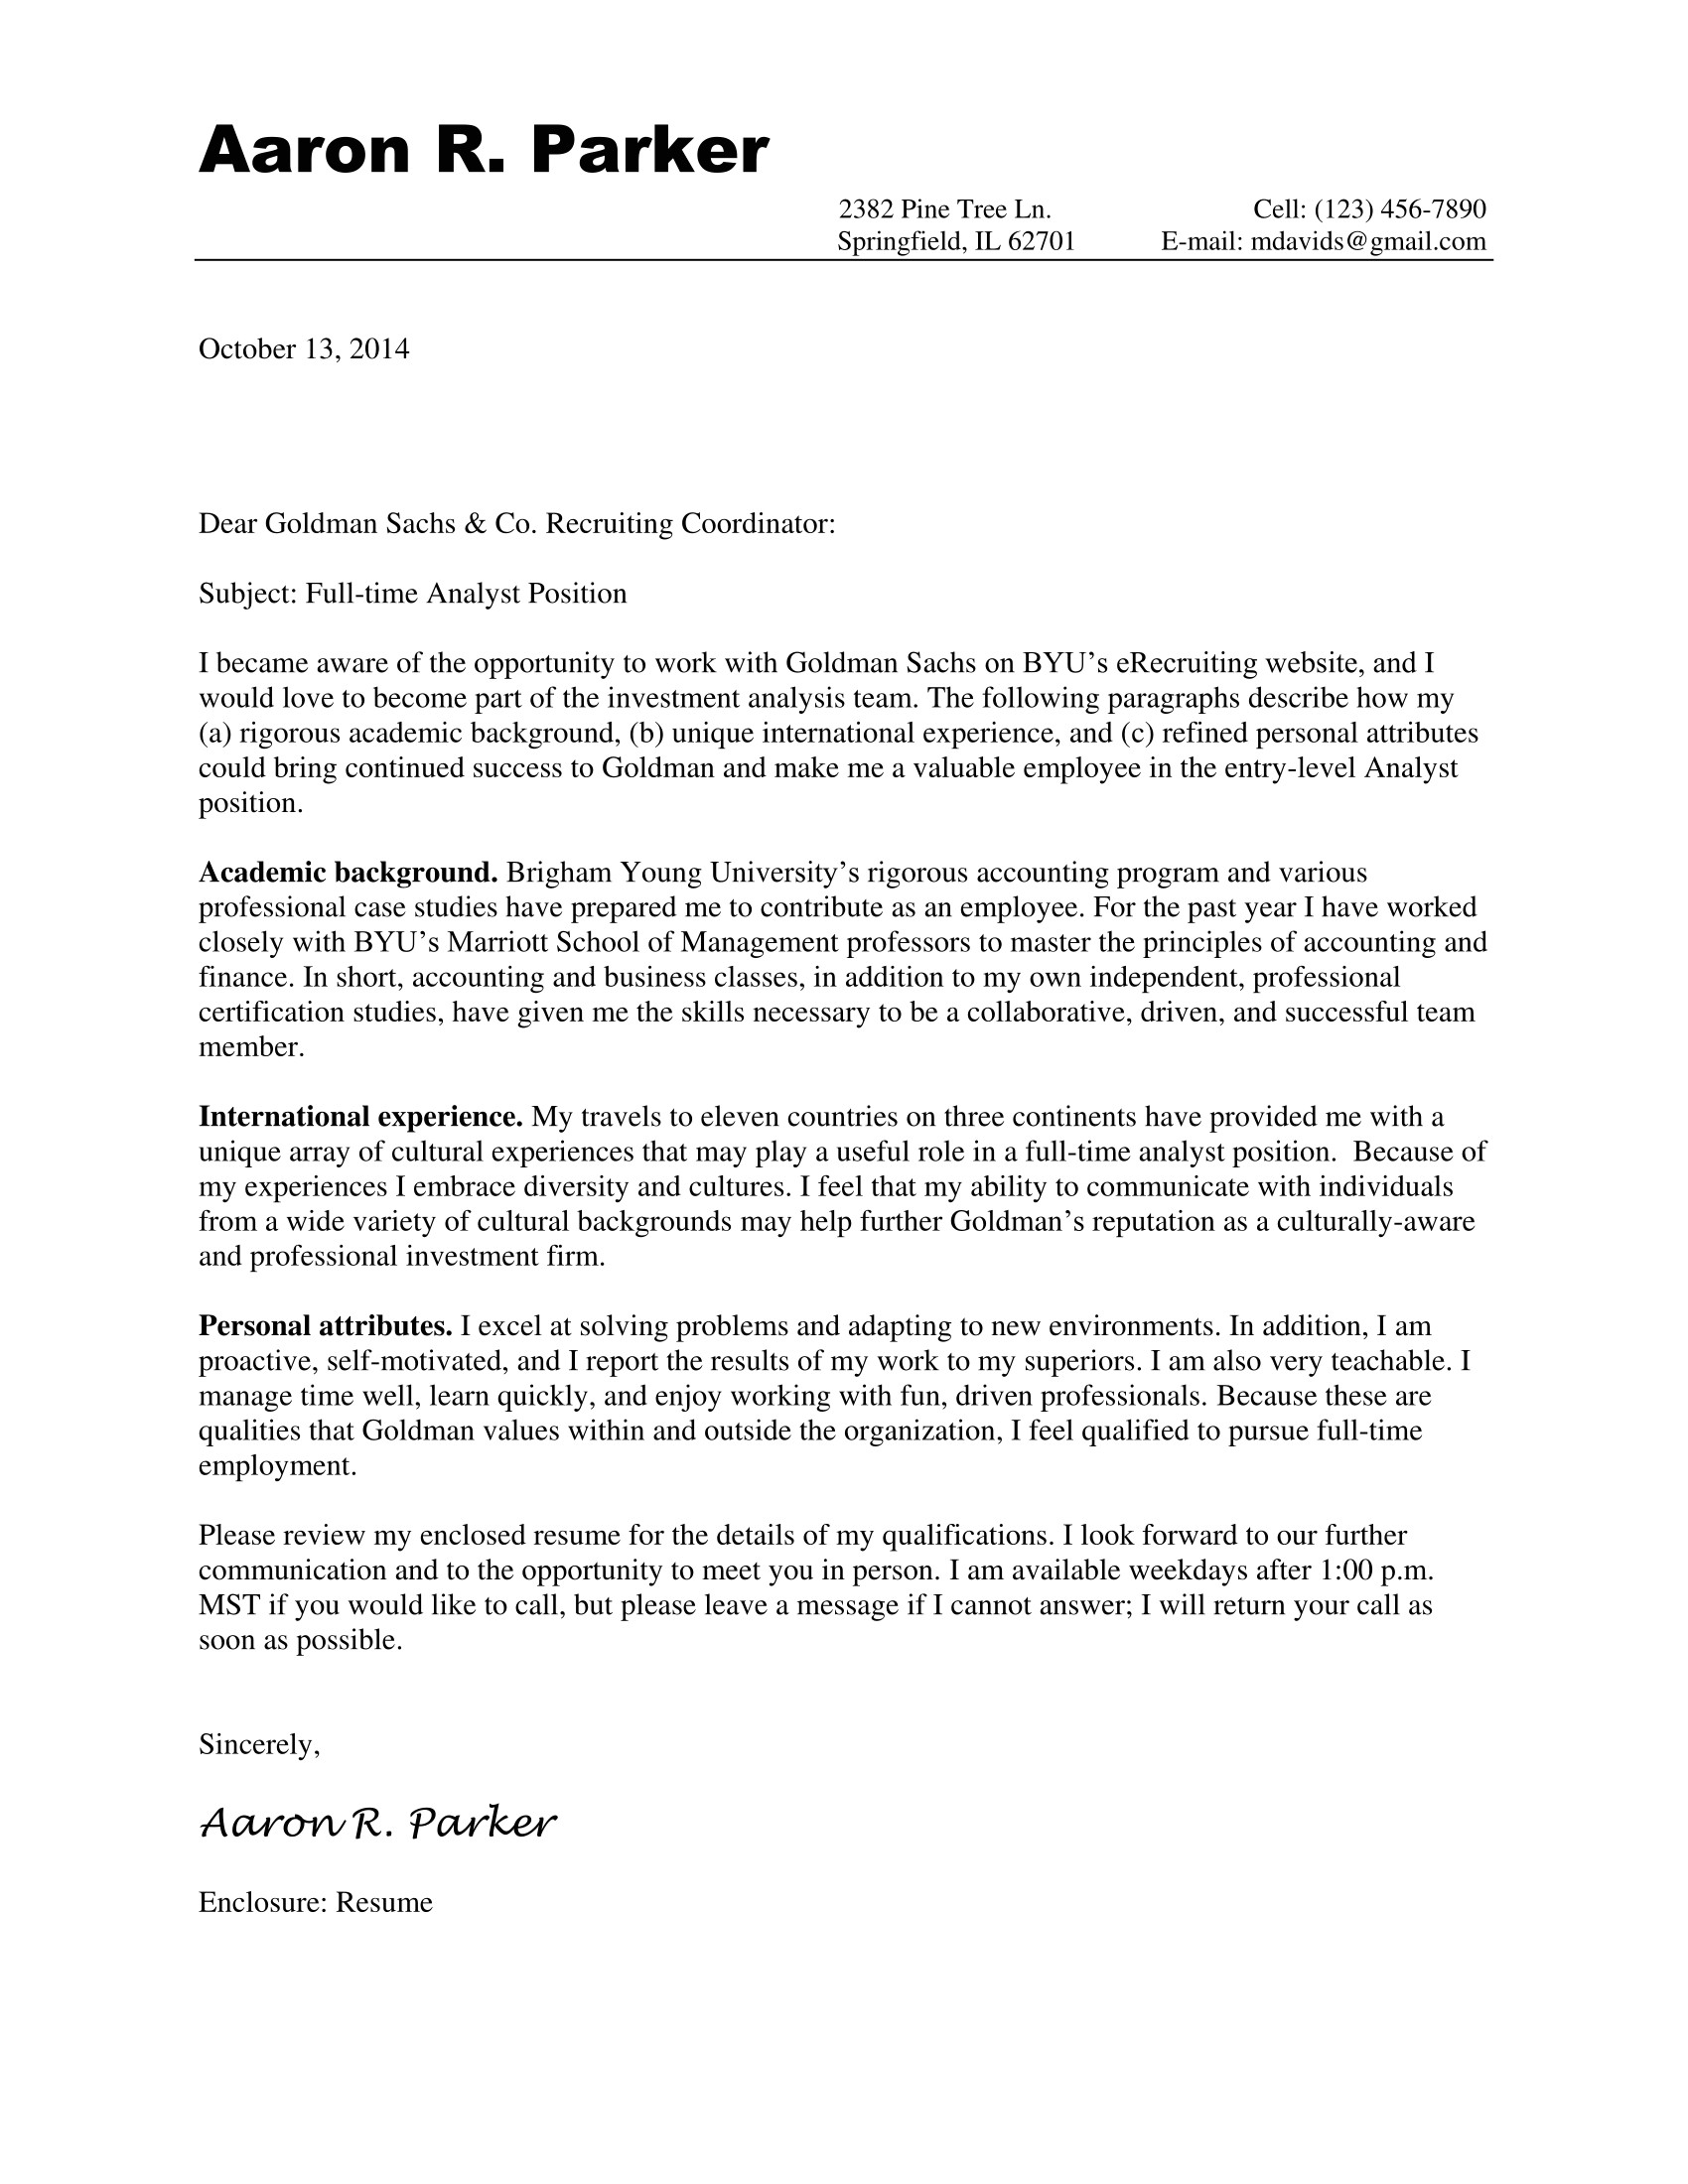 goldman sachs internship cover letter